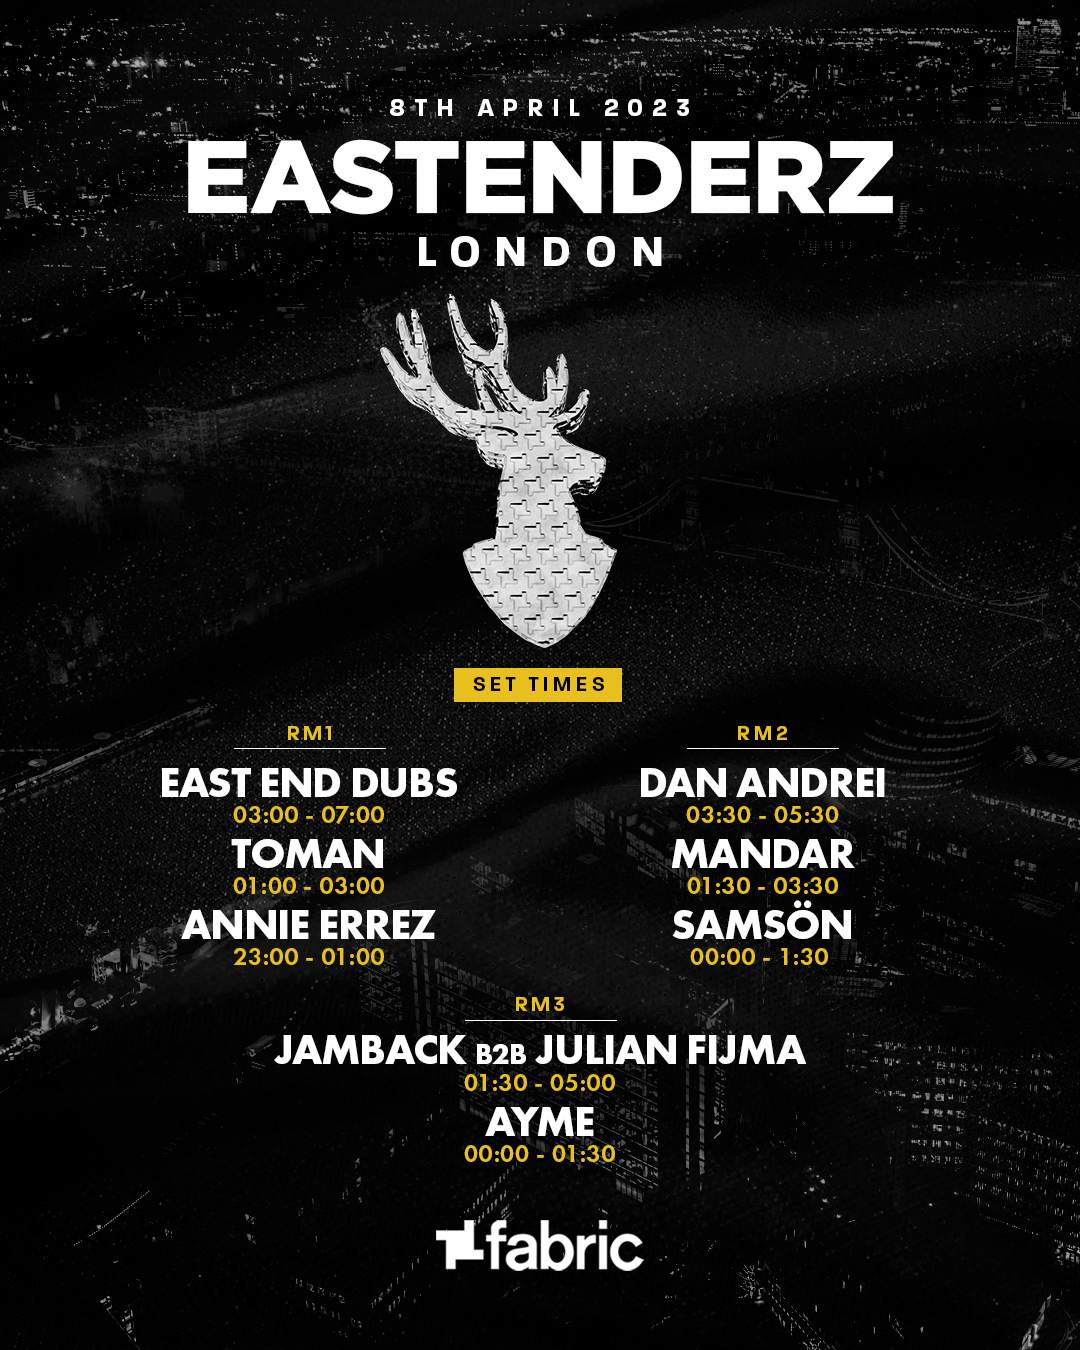 Eastenderz at fabric: East End Dubs, Toman, Mandar, Dan Andrei, Annie Errez + more - フライヤー裏